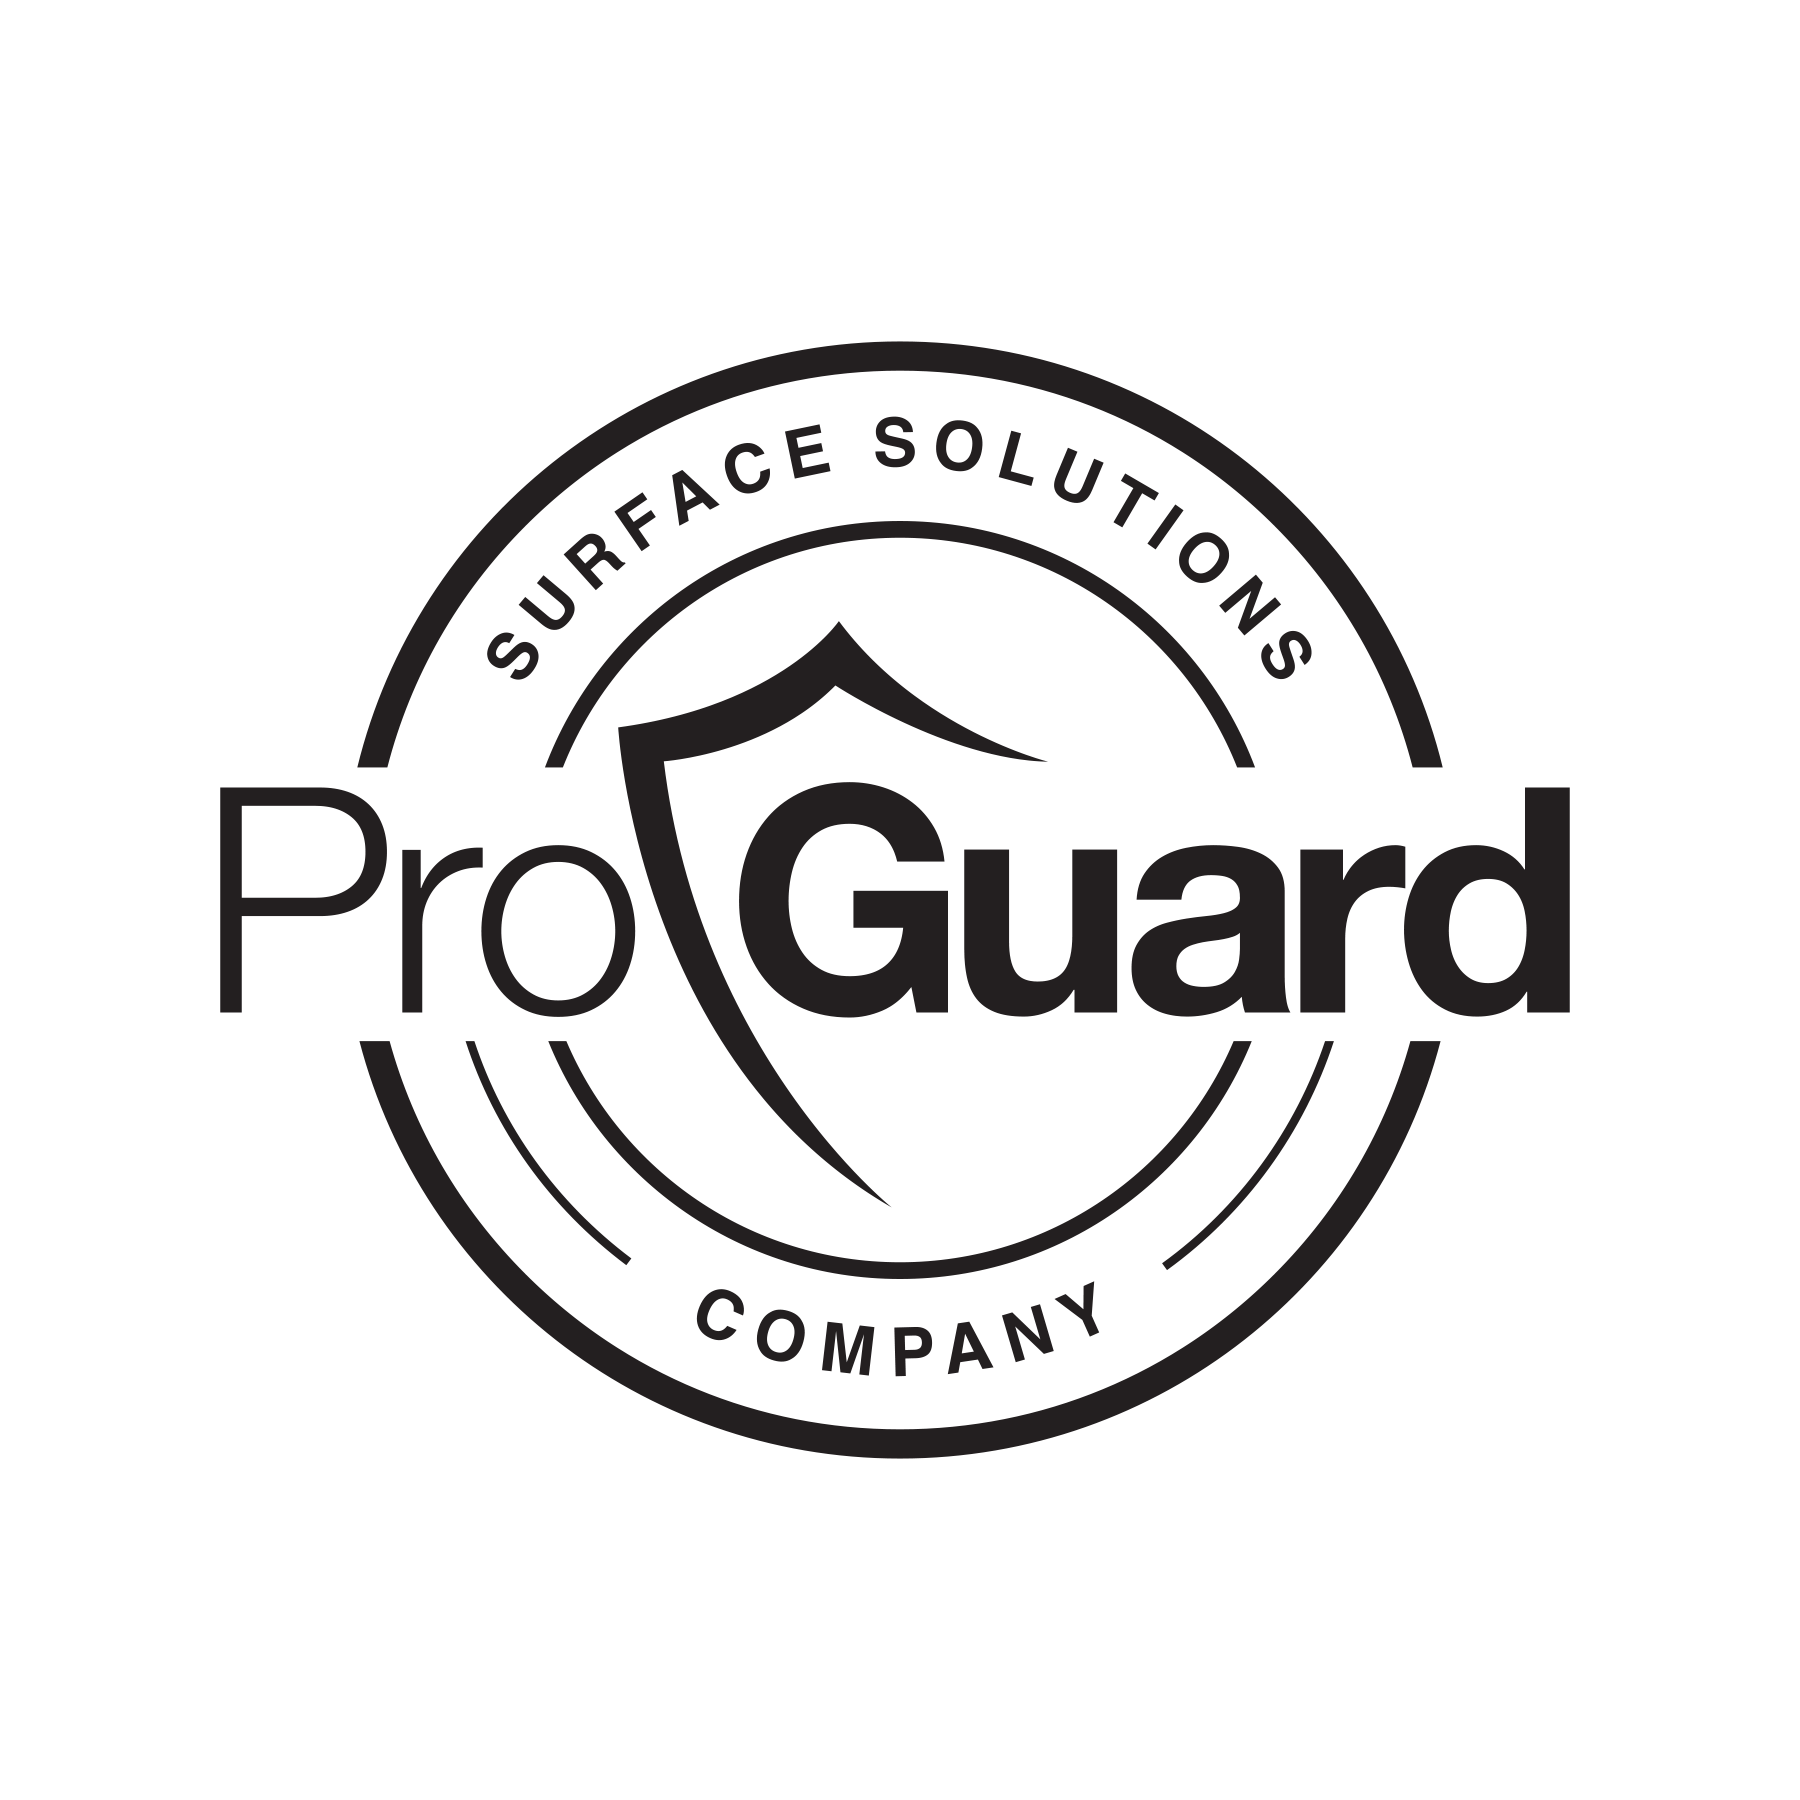 ProGuard Solutions Co.